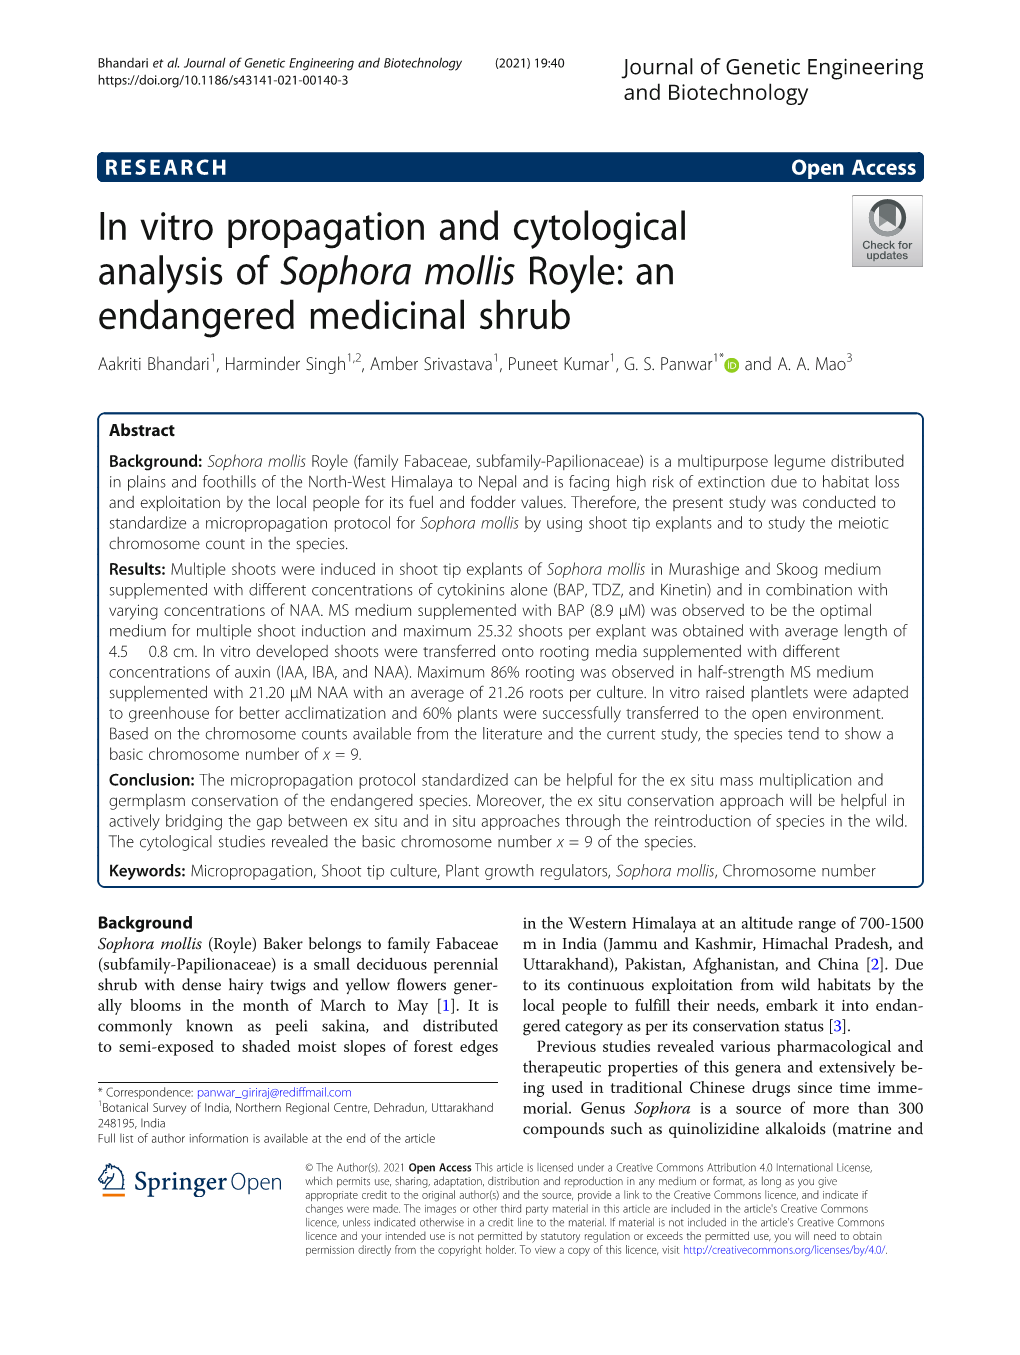 In Vitro Propagation and Cytological Analysis of Sophora Mollis Royle: an Endangered Medicinal Shrub